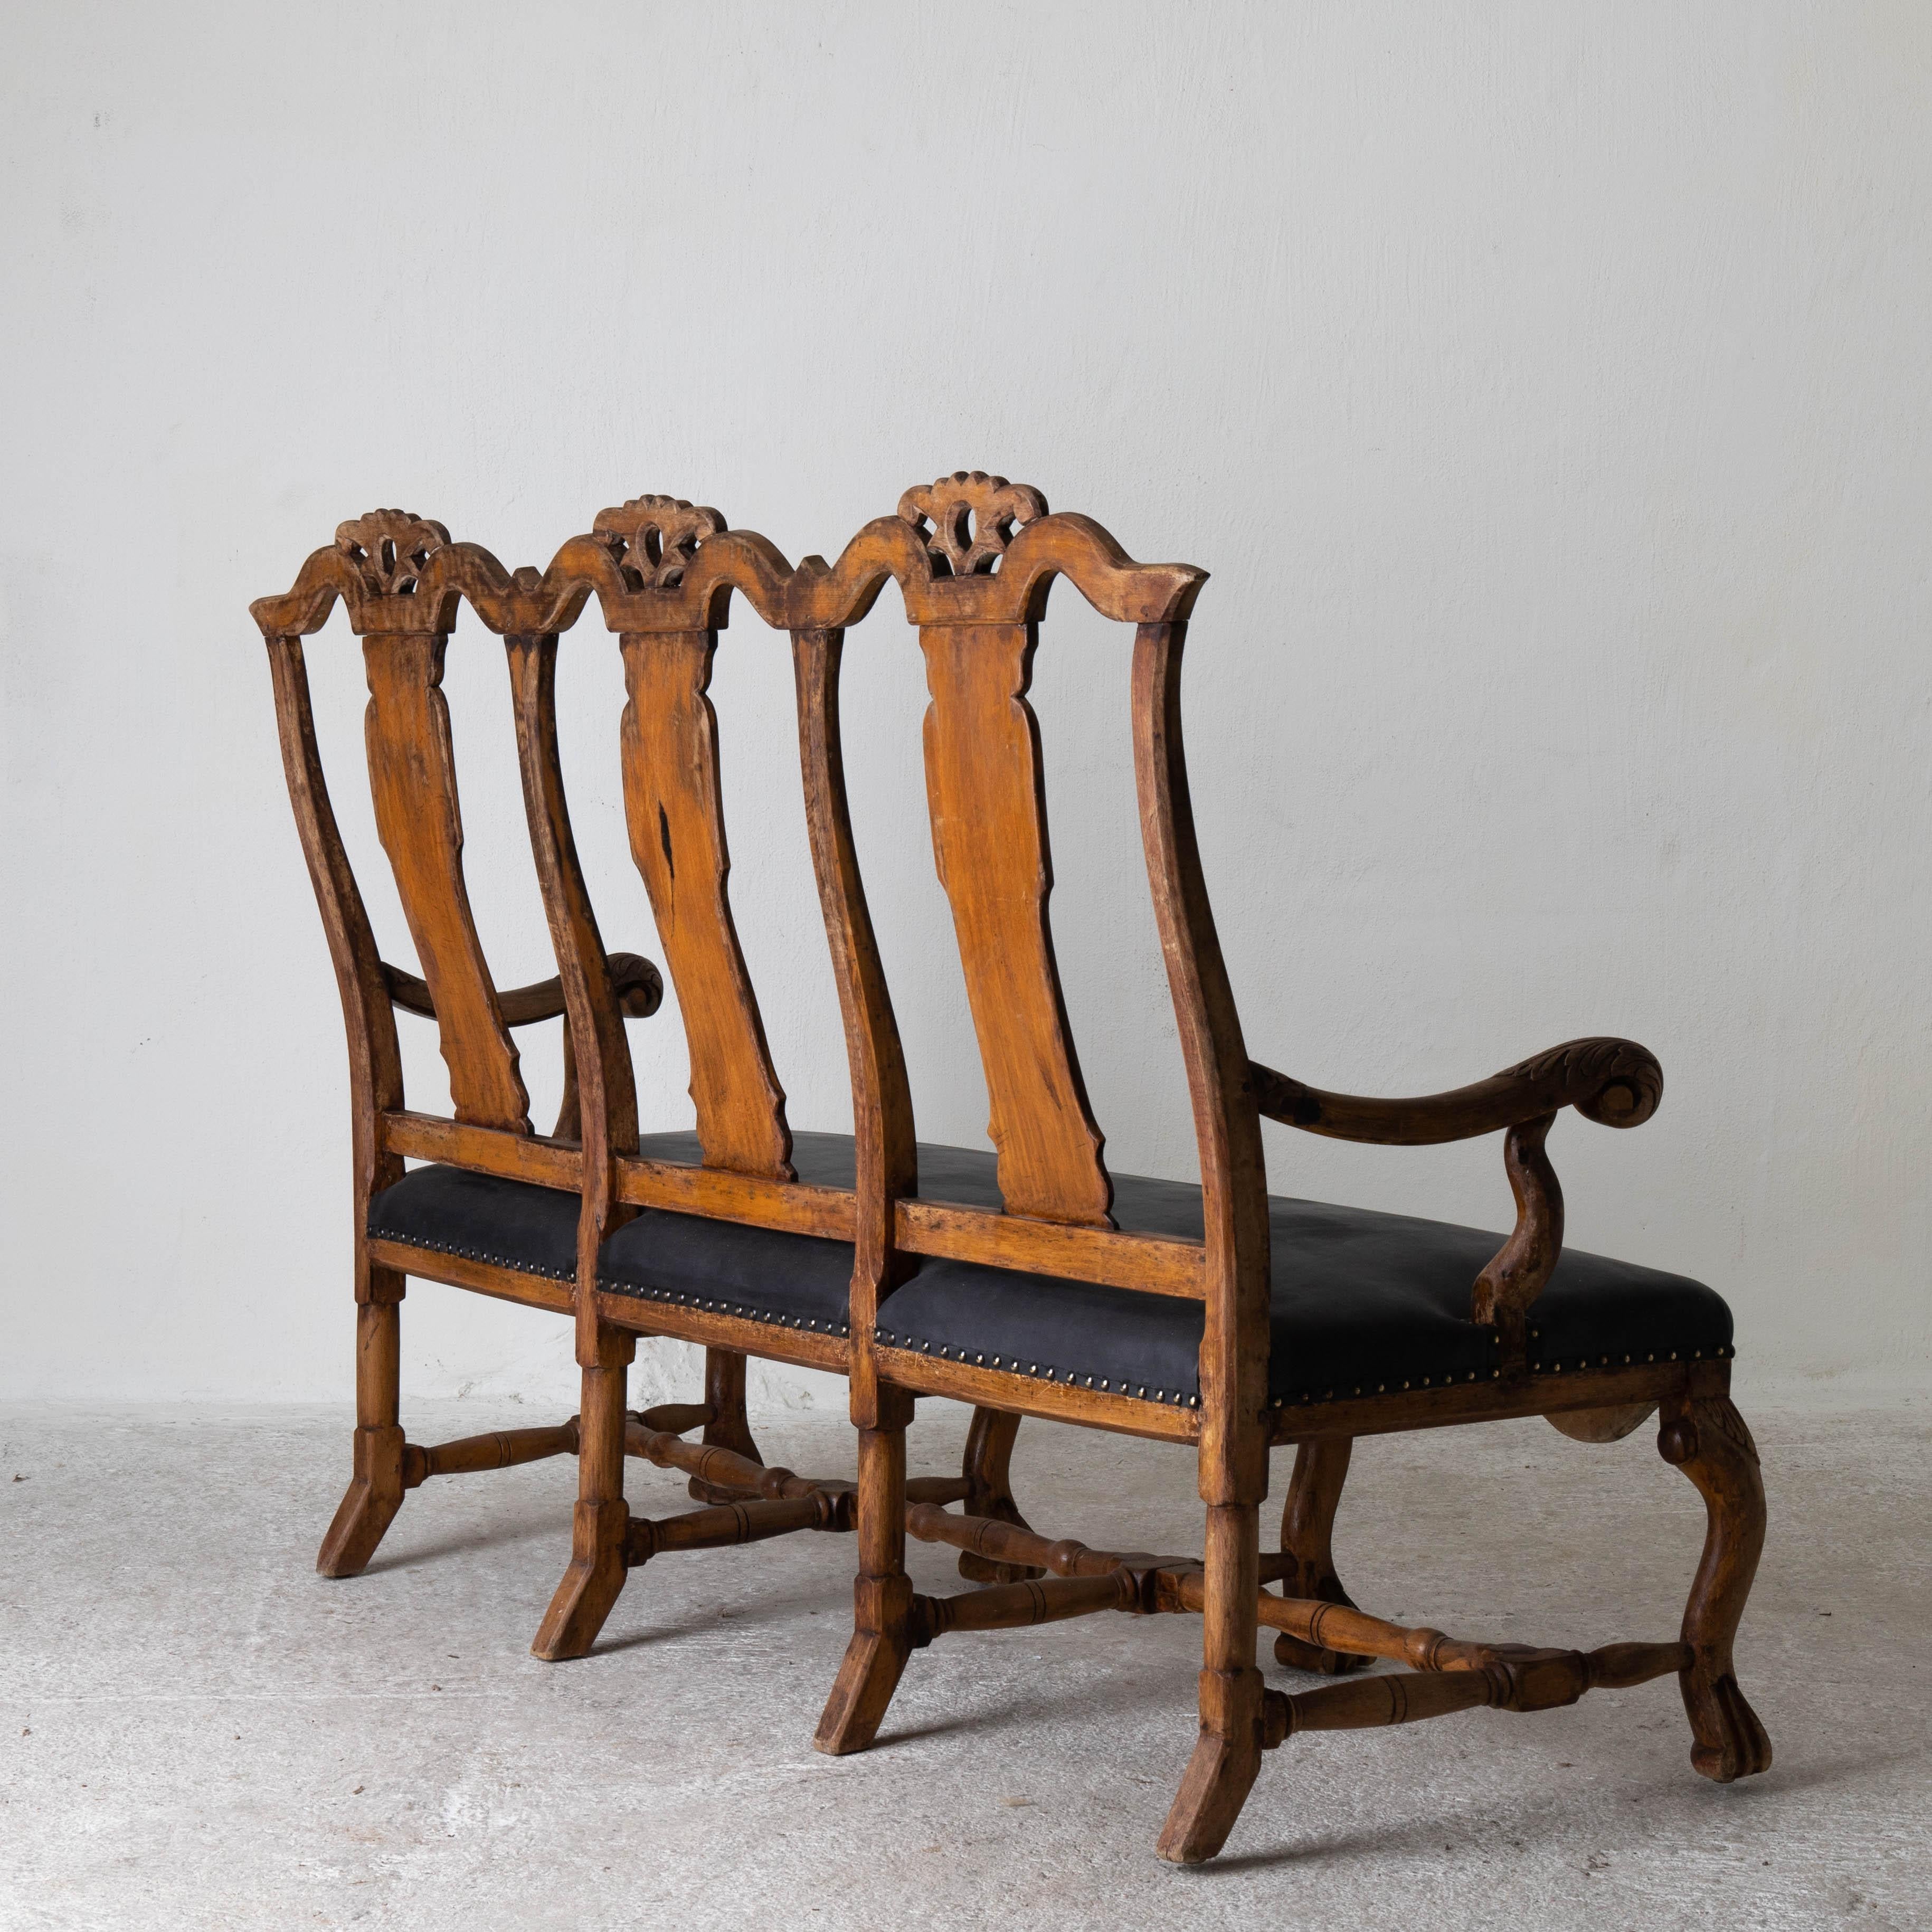 Sofa Bench Swedish Baroque Period 1650-1750 Brown Black, Sweden For Sale 5